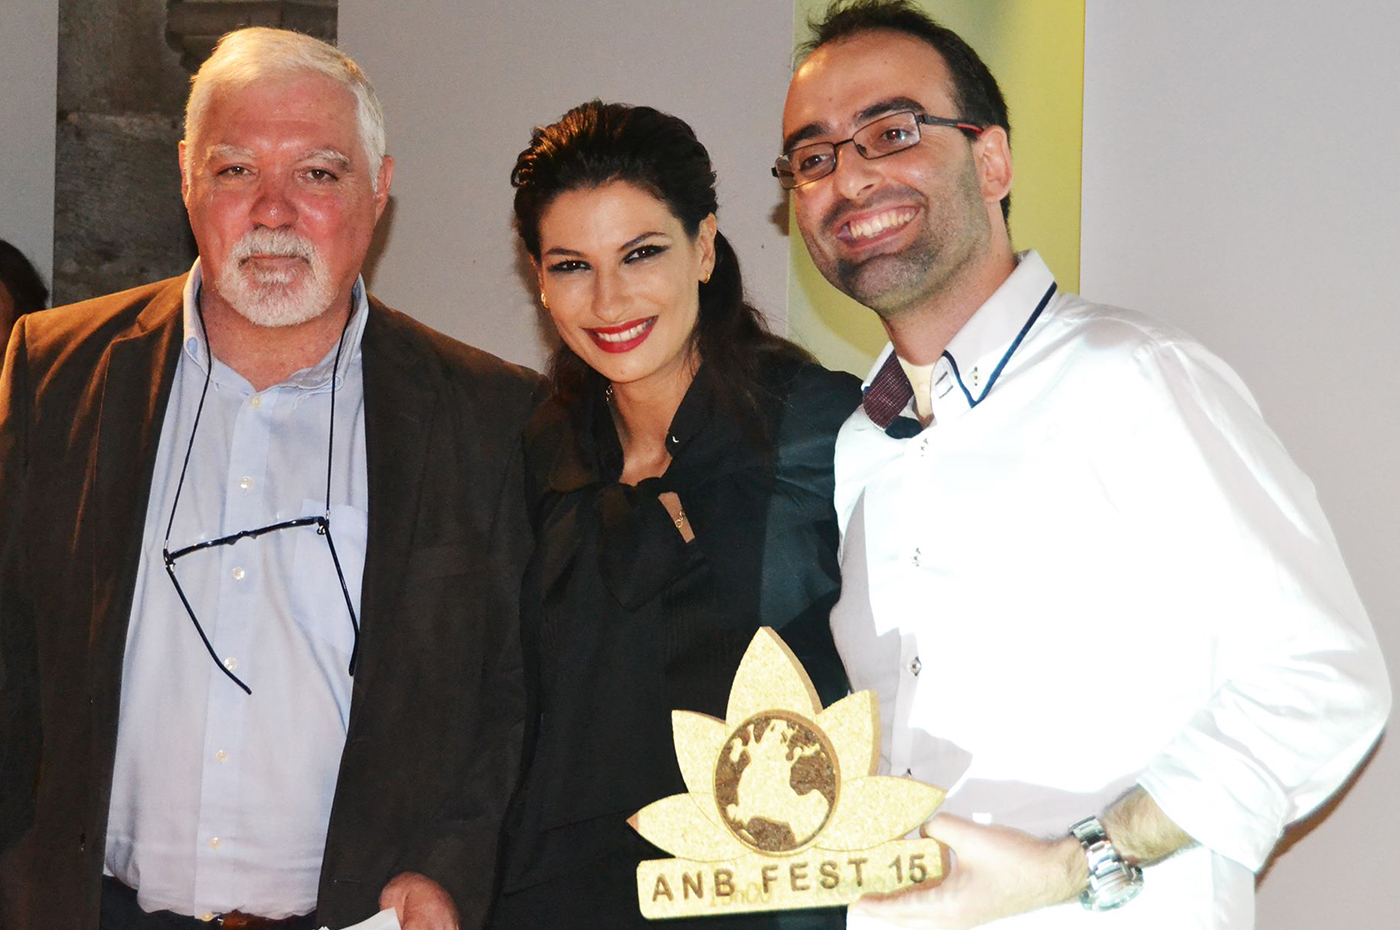 Fábio Jesuíno, CEO da 3WX, recebe prémio de empreendedorismo ANB FEST 2015